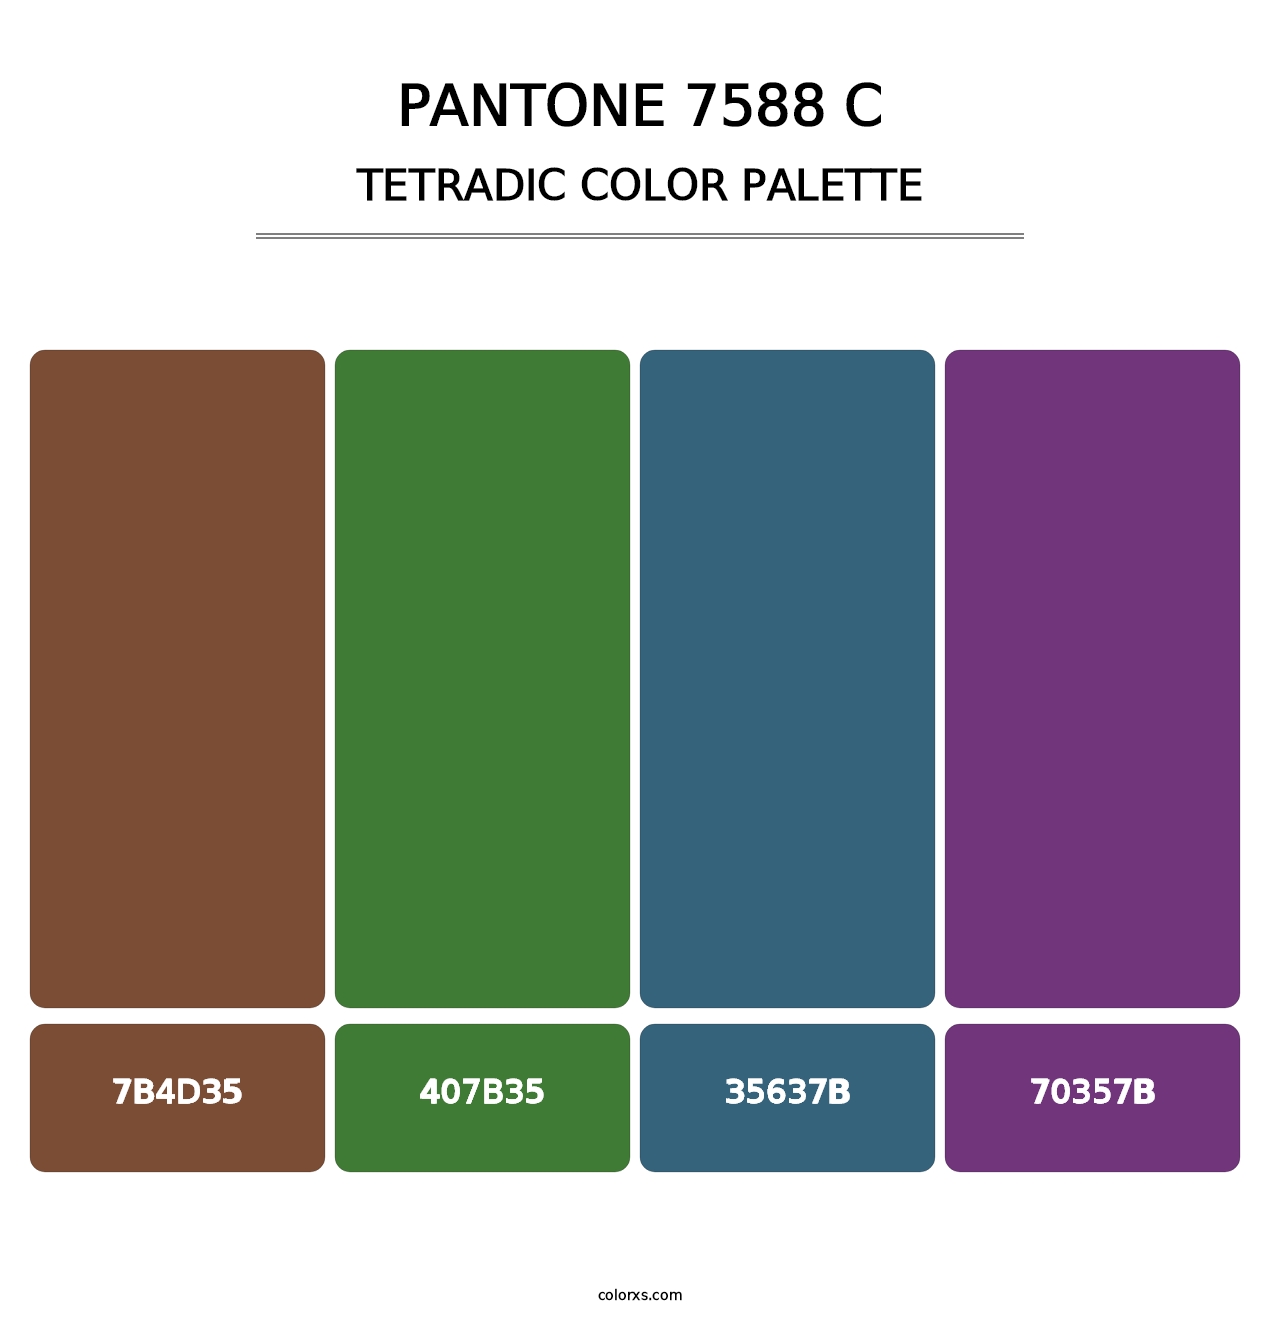 PANTONE 7588 C - Tetradic Color Palette